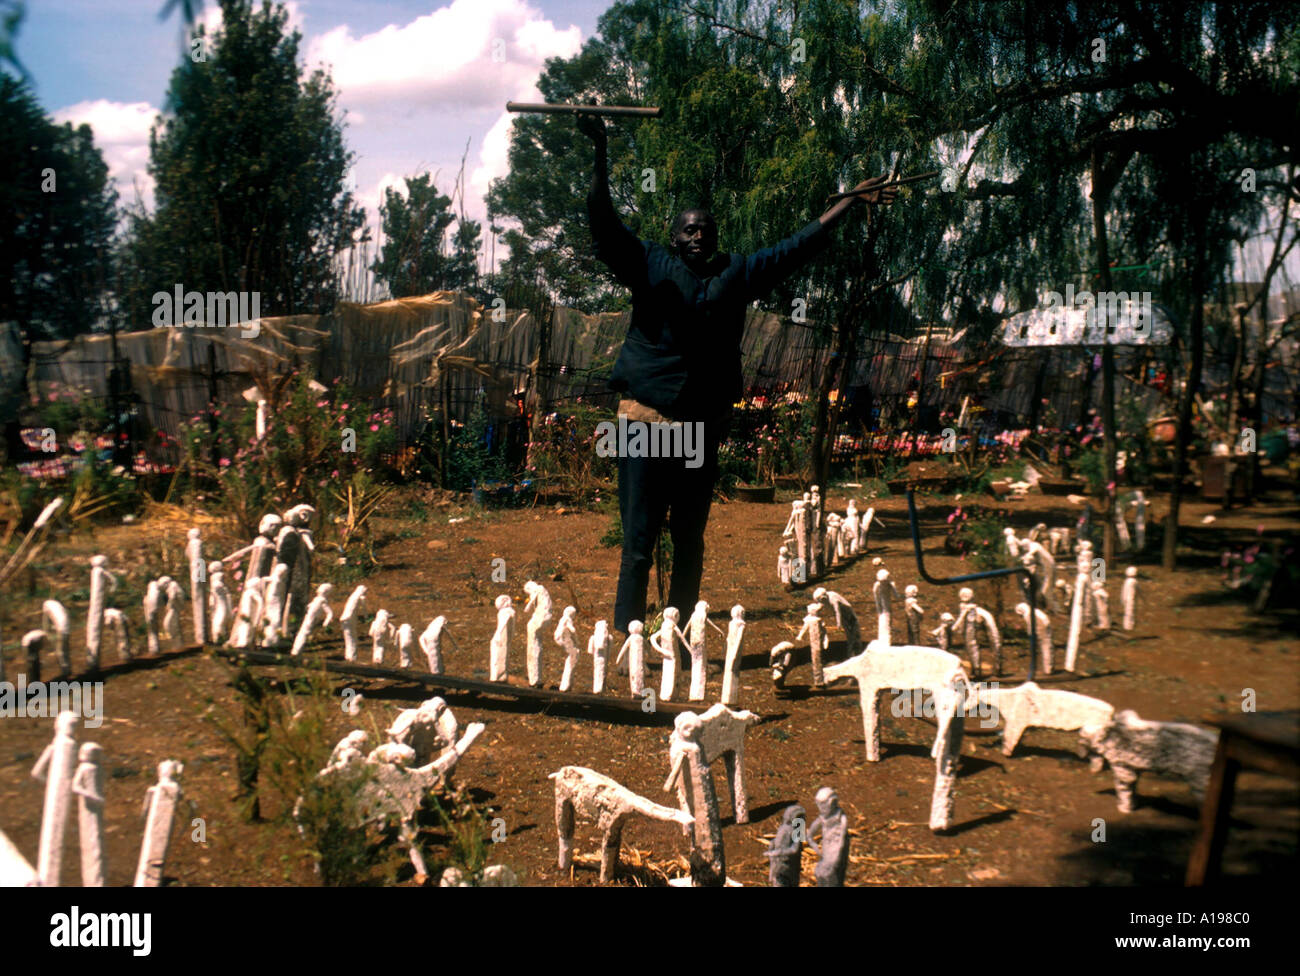 Witch doctor Eldoret Kenya Africa V Theakston Stock Photo